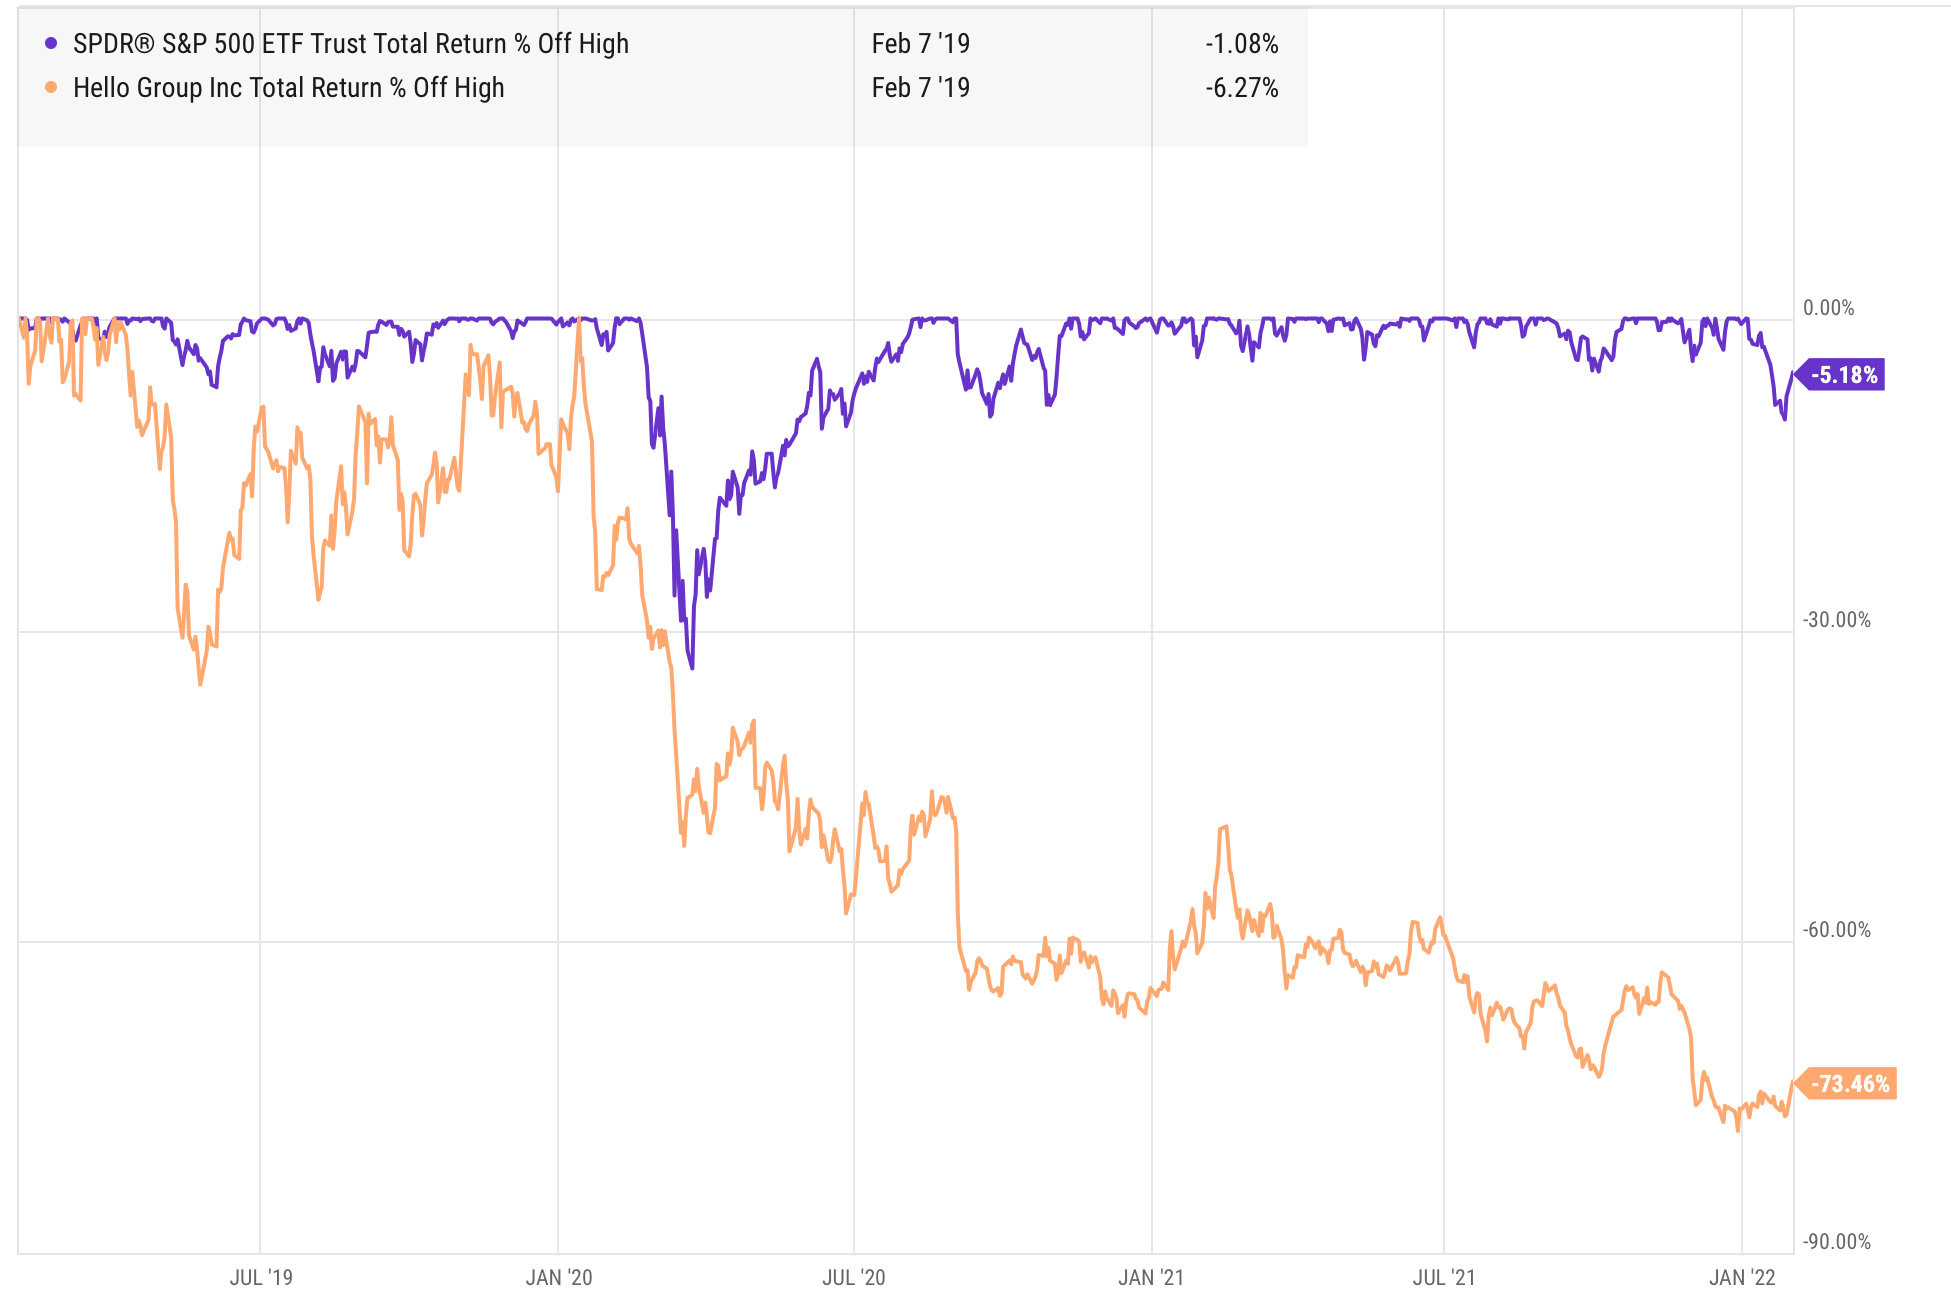 Hello Group Stock: An Obvious Value Play (NASDAQ:MOMO) | Seeking Alpha